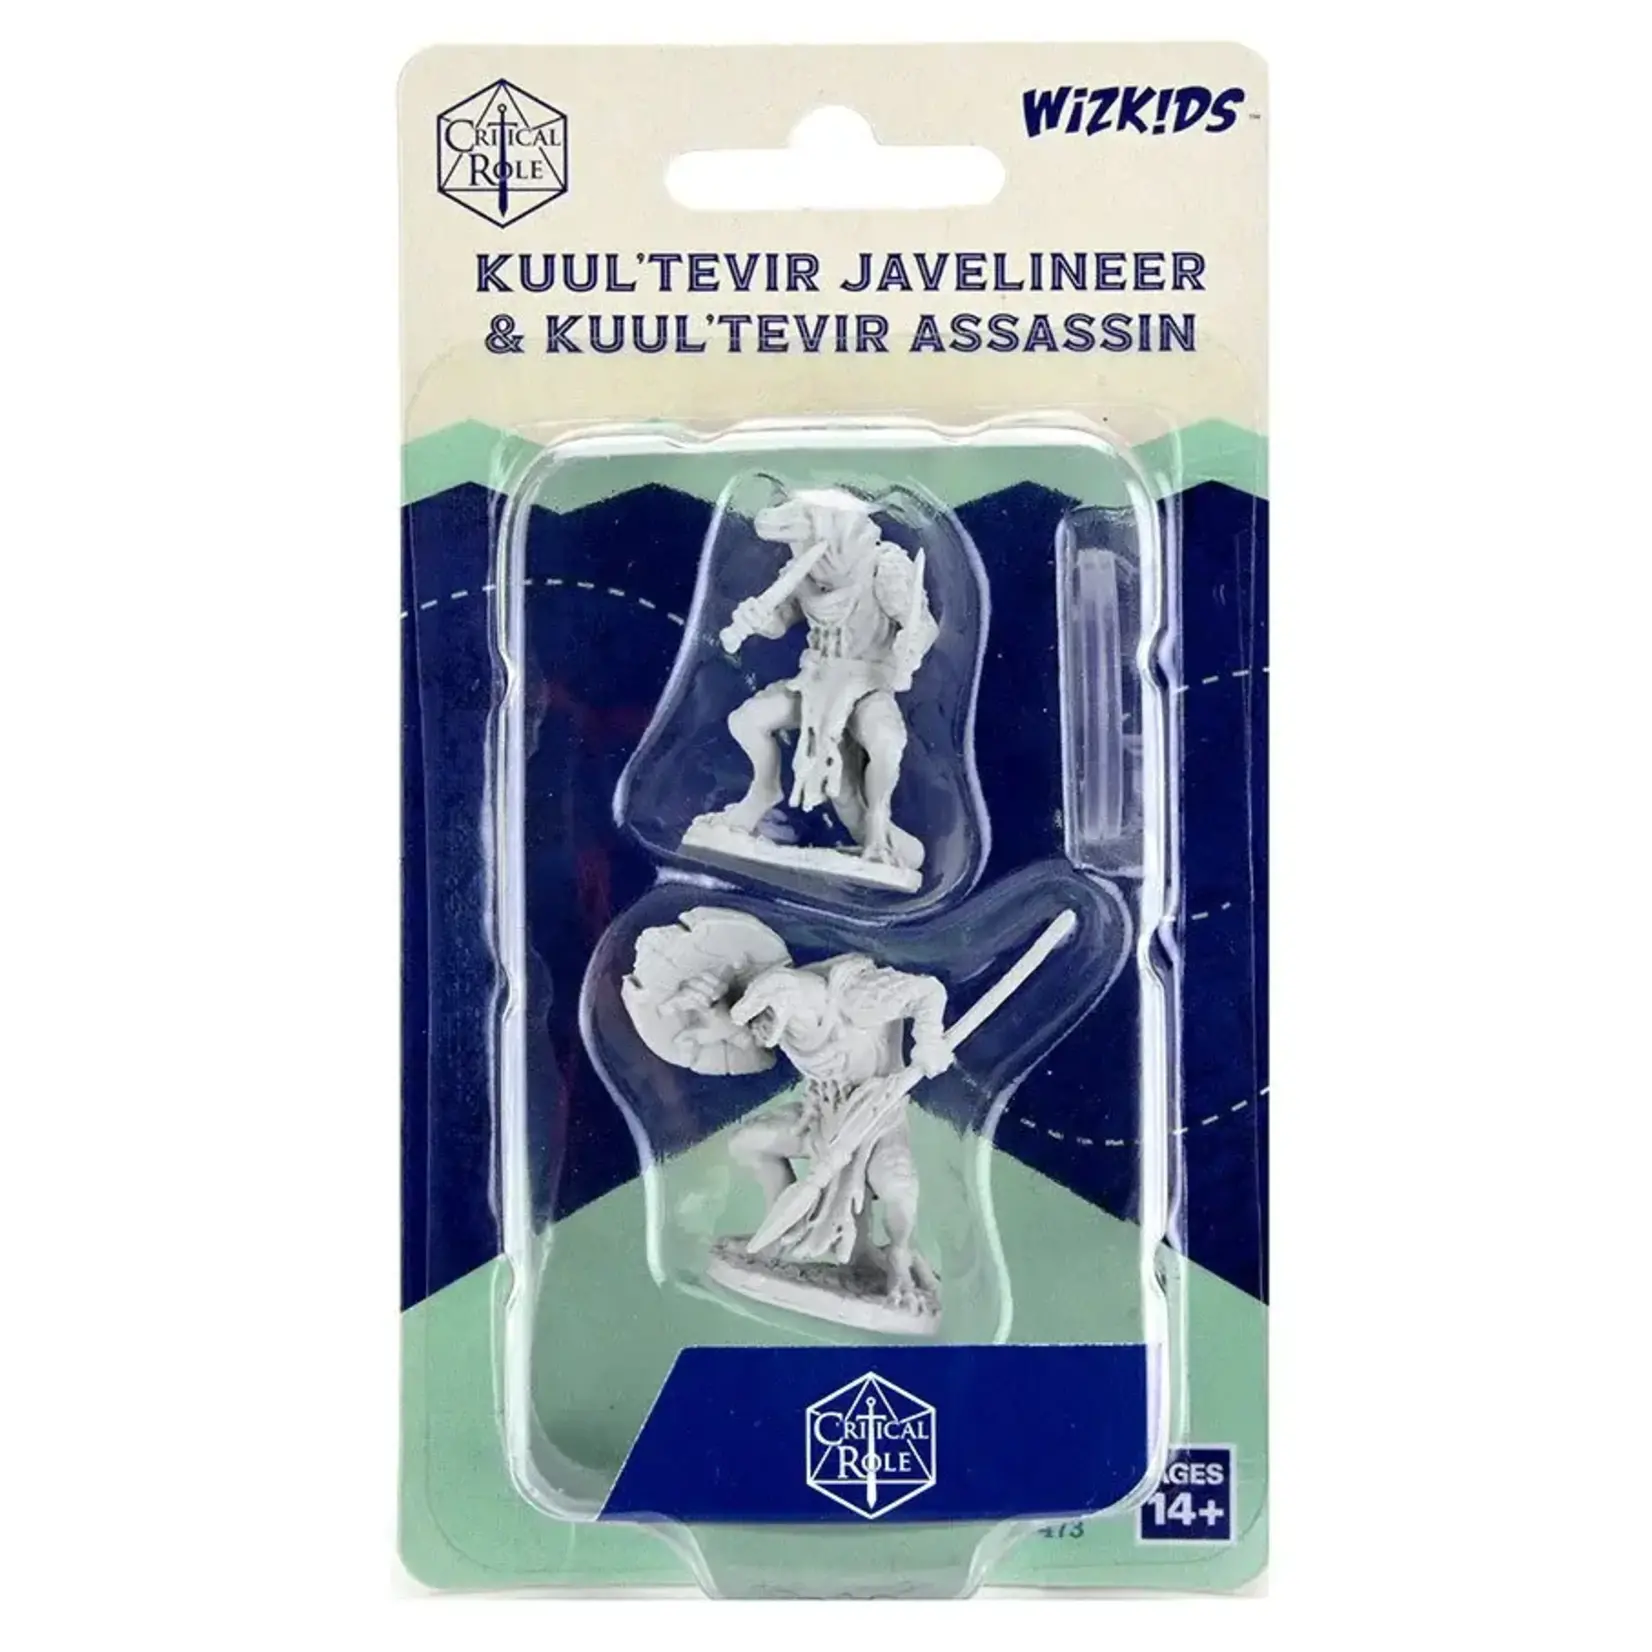 Wiz Kids Unpainted Miniatures: Kuul'tevir Javelineer and Assassin - CR - W02